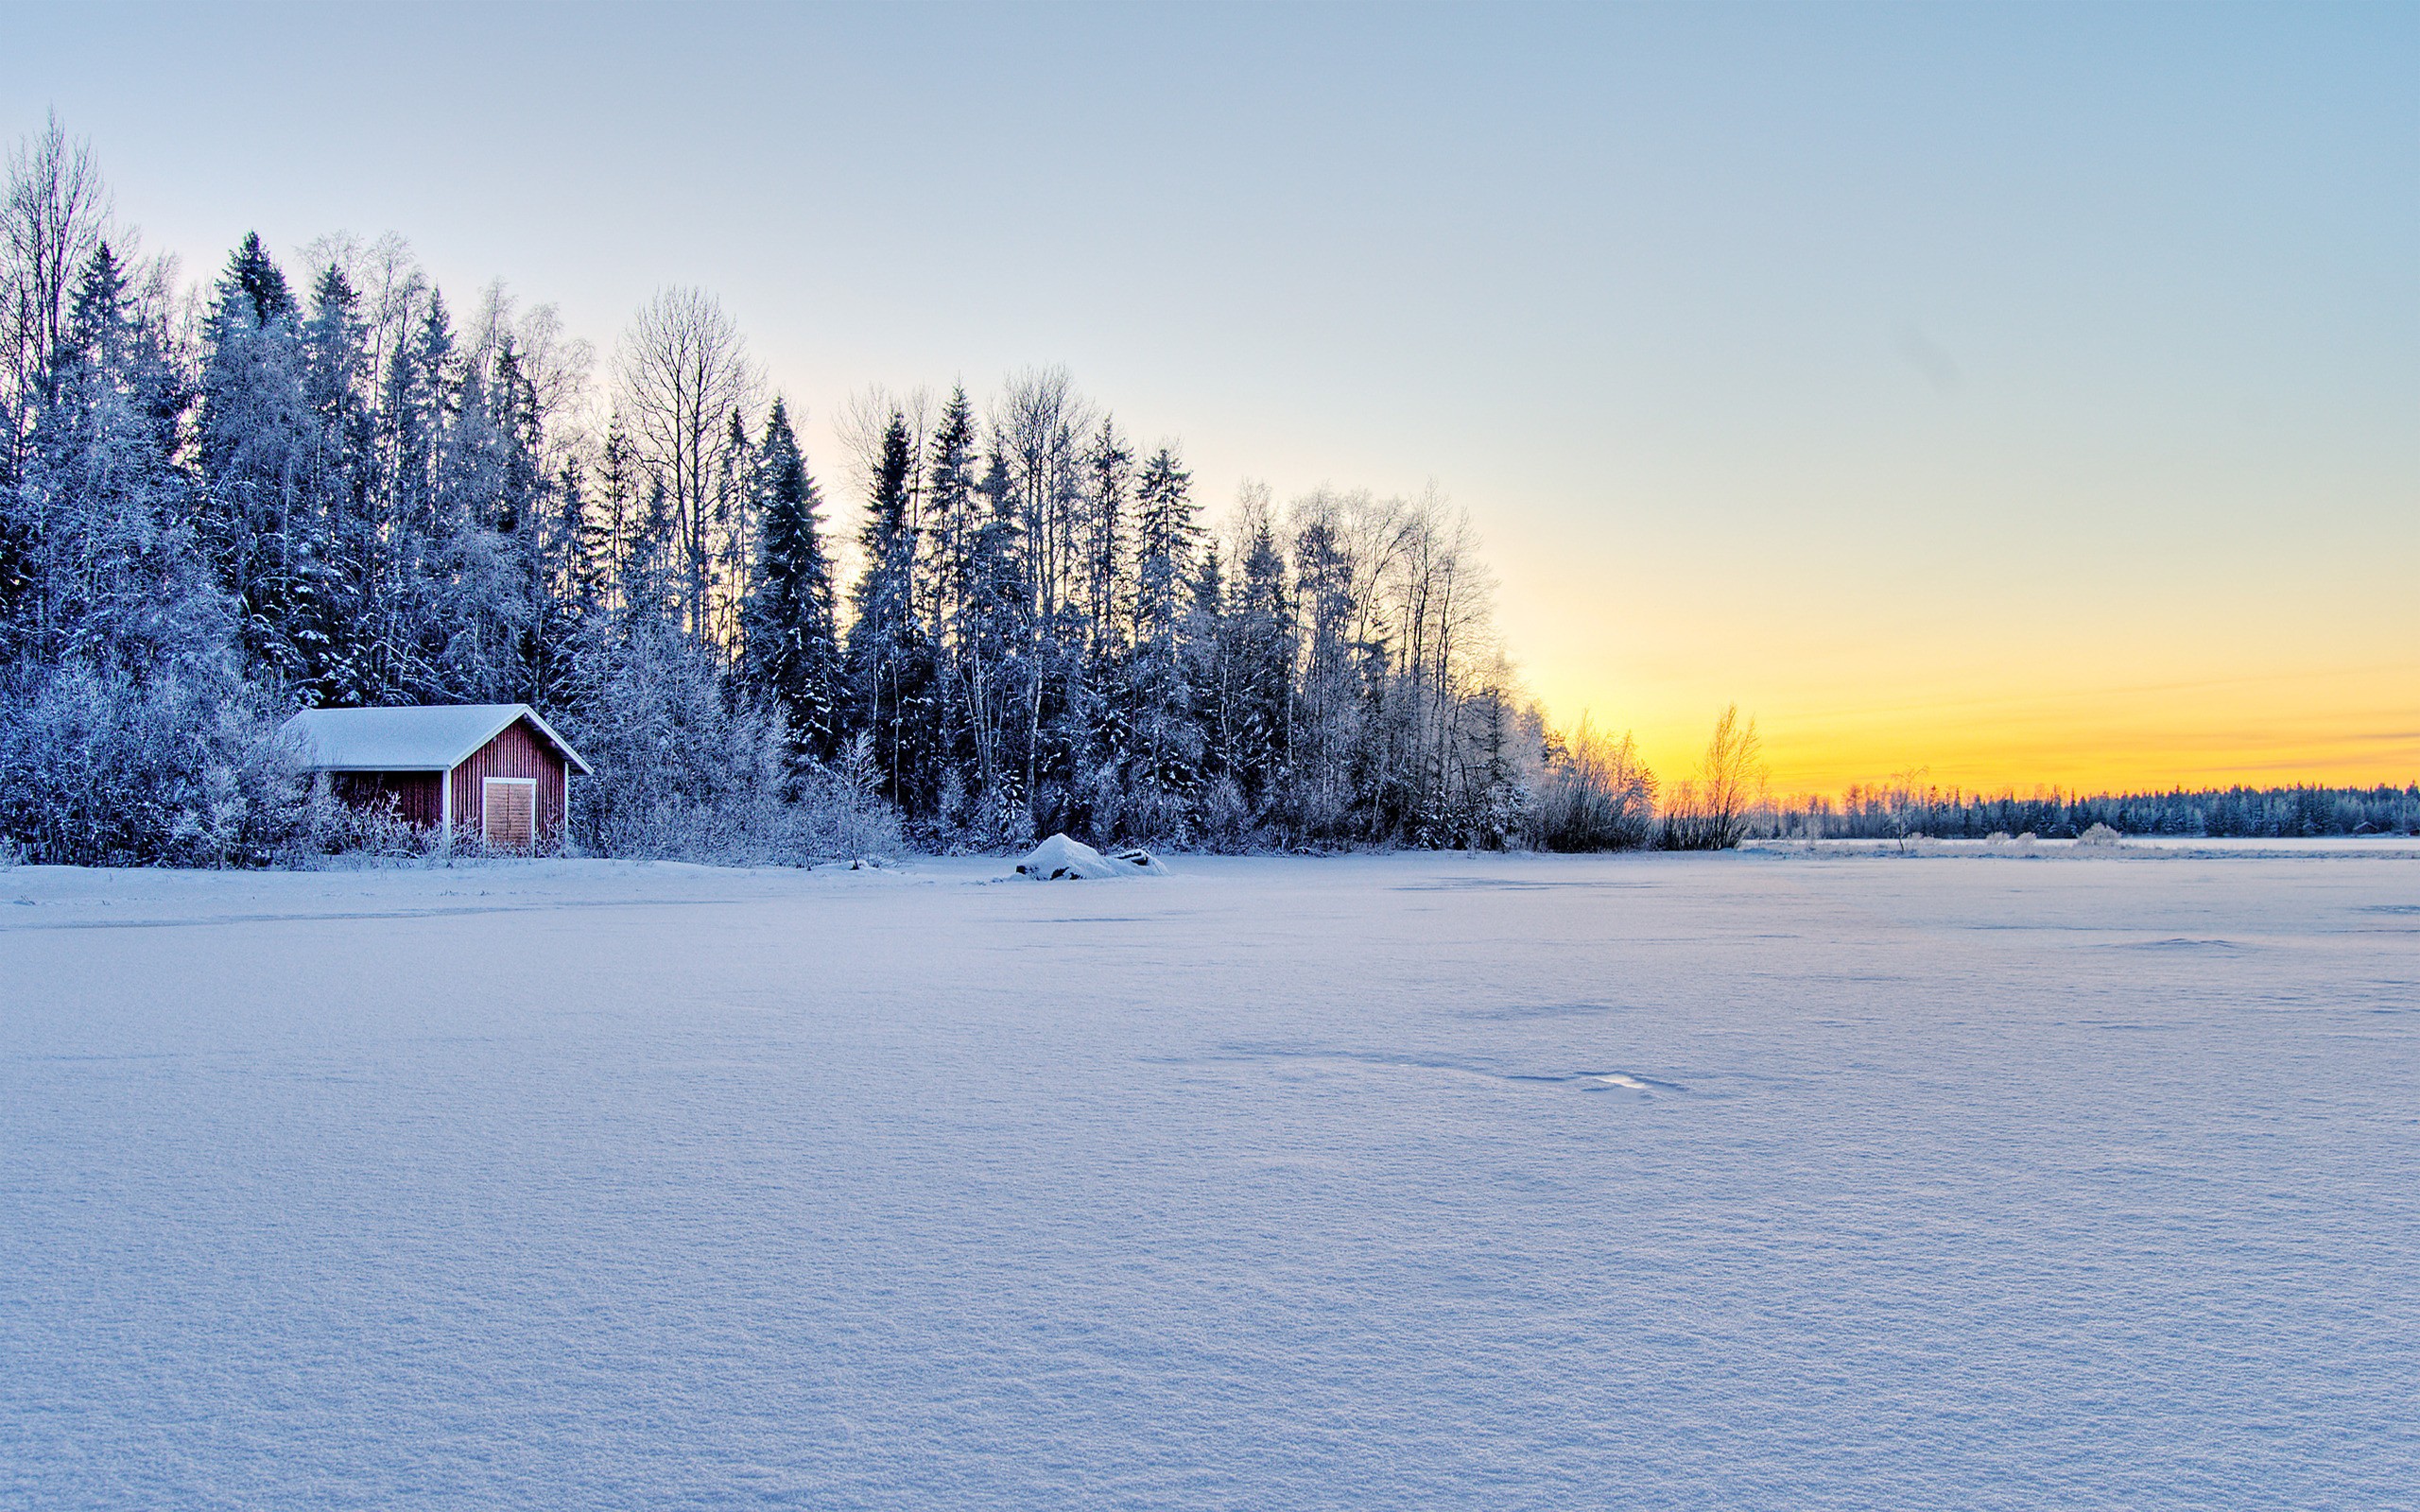 landscapes, snow - desktop wallpaper